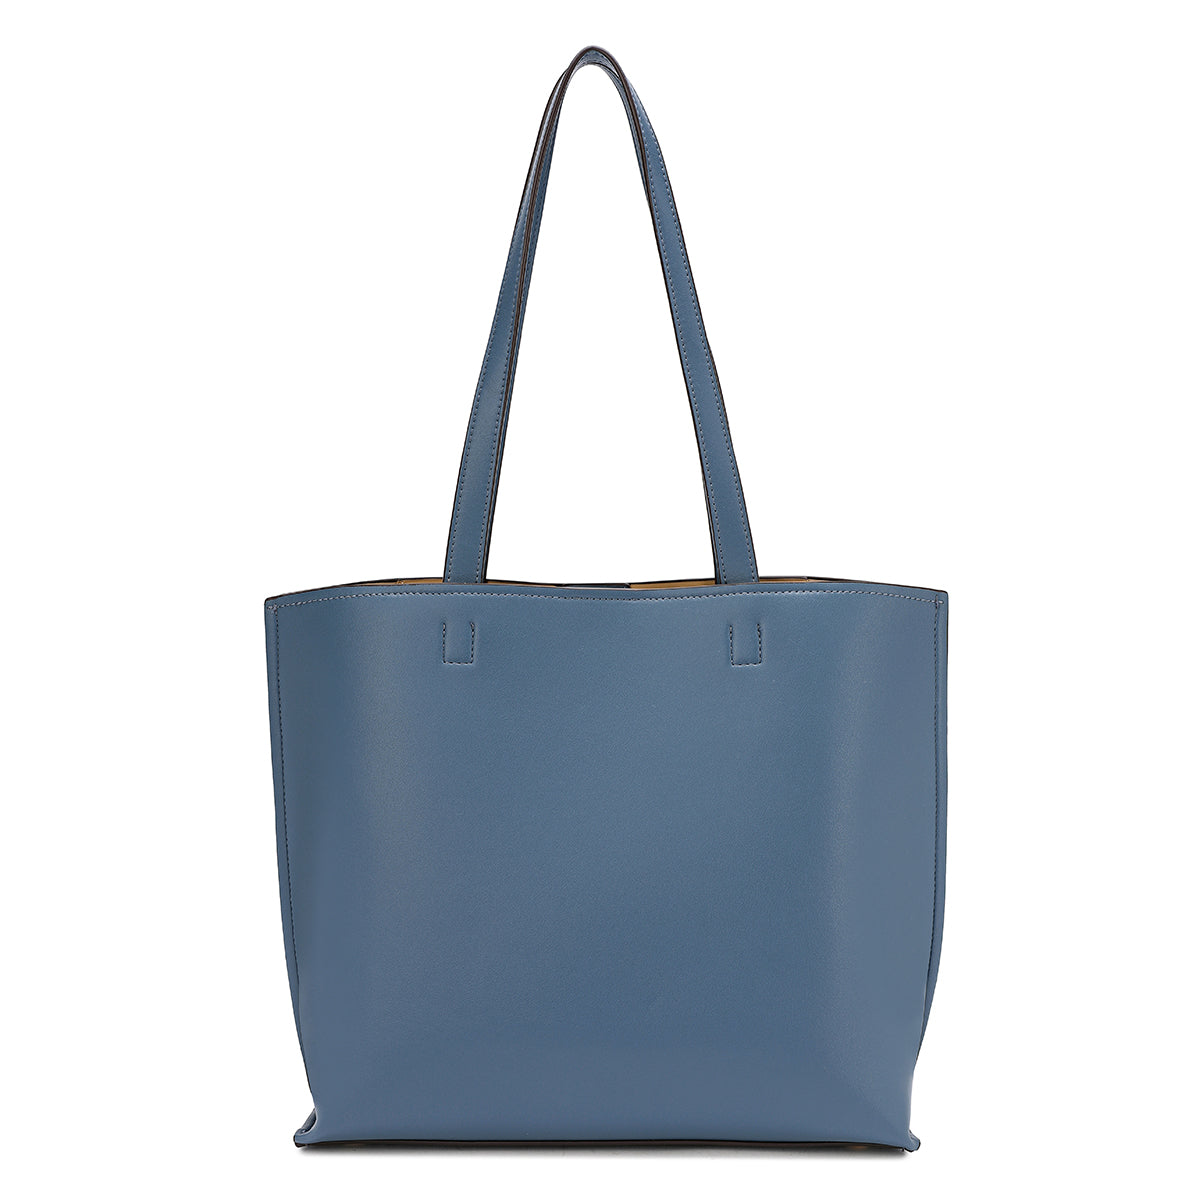 Saga shoulder bag with zip closure, 35.5 cm wide, in two colors